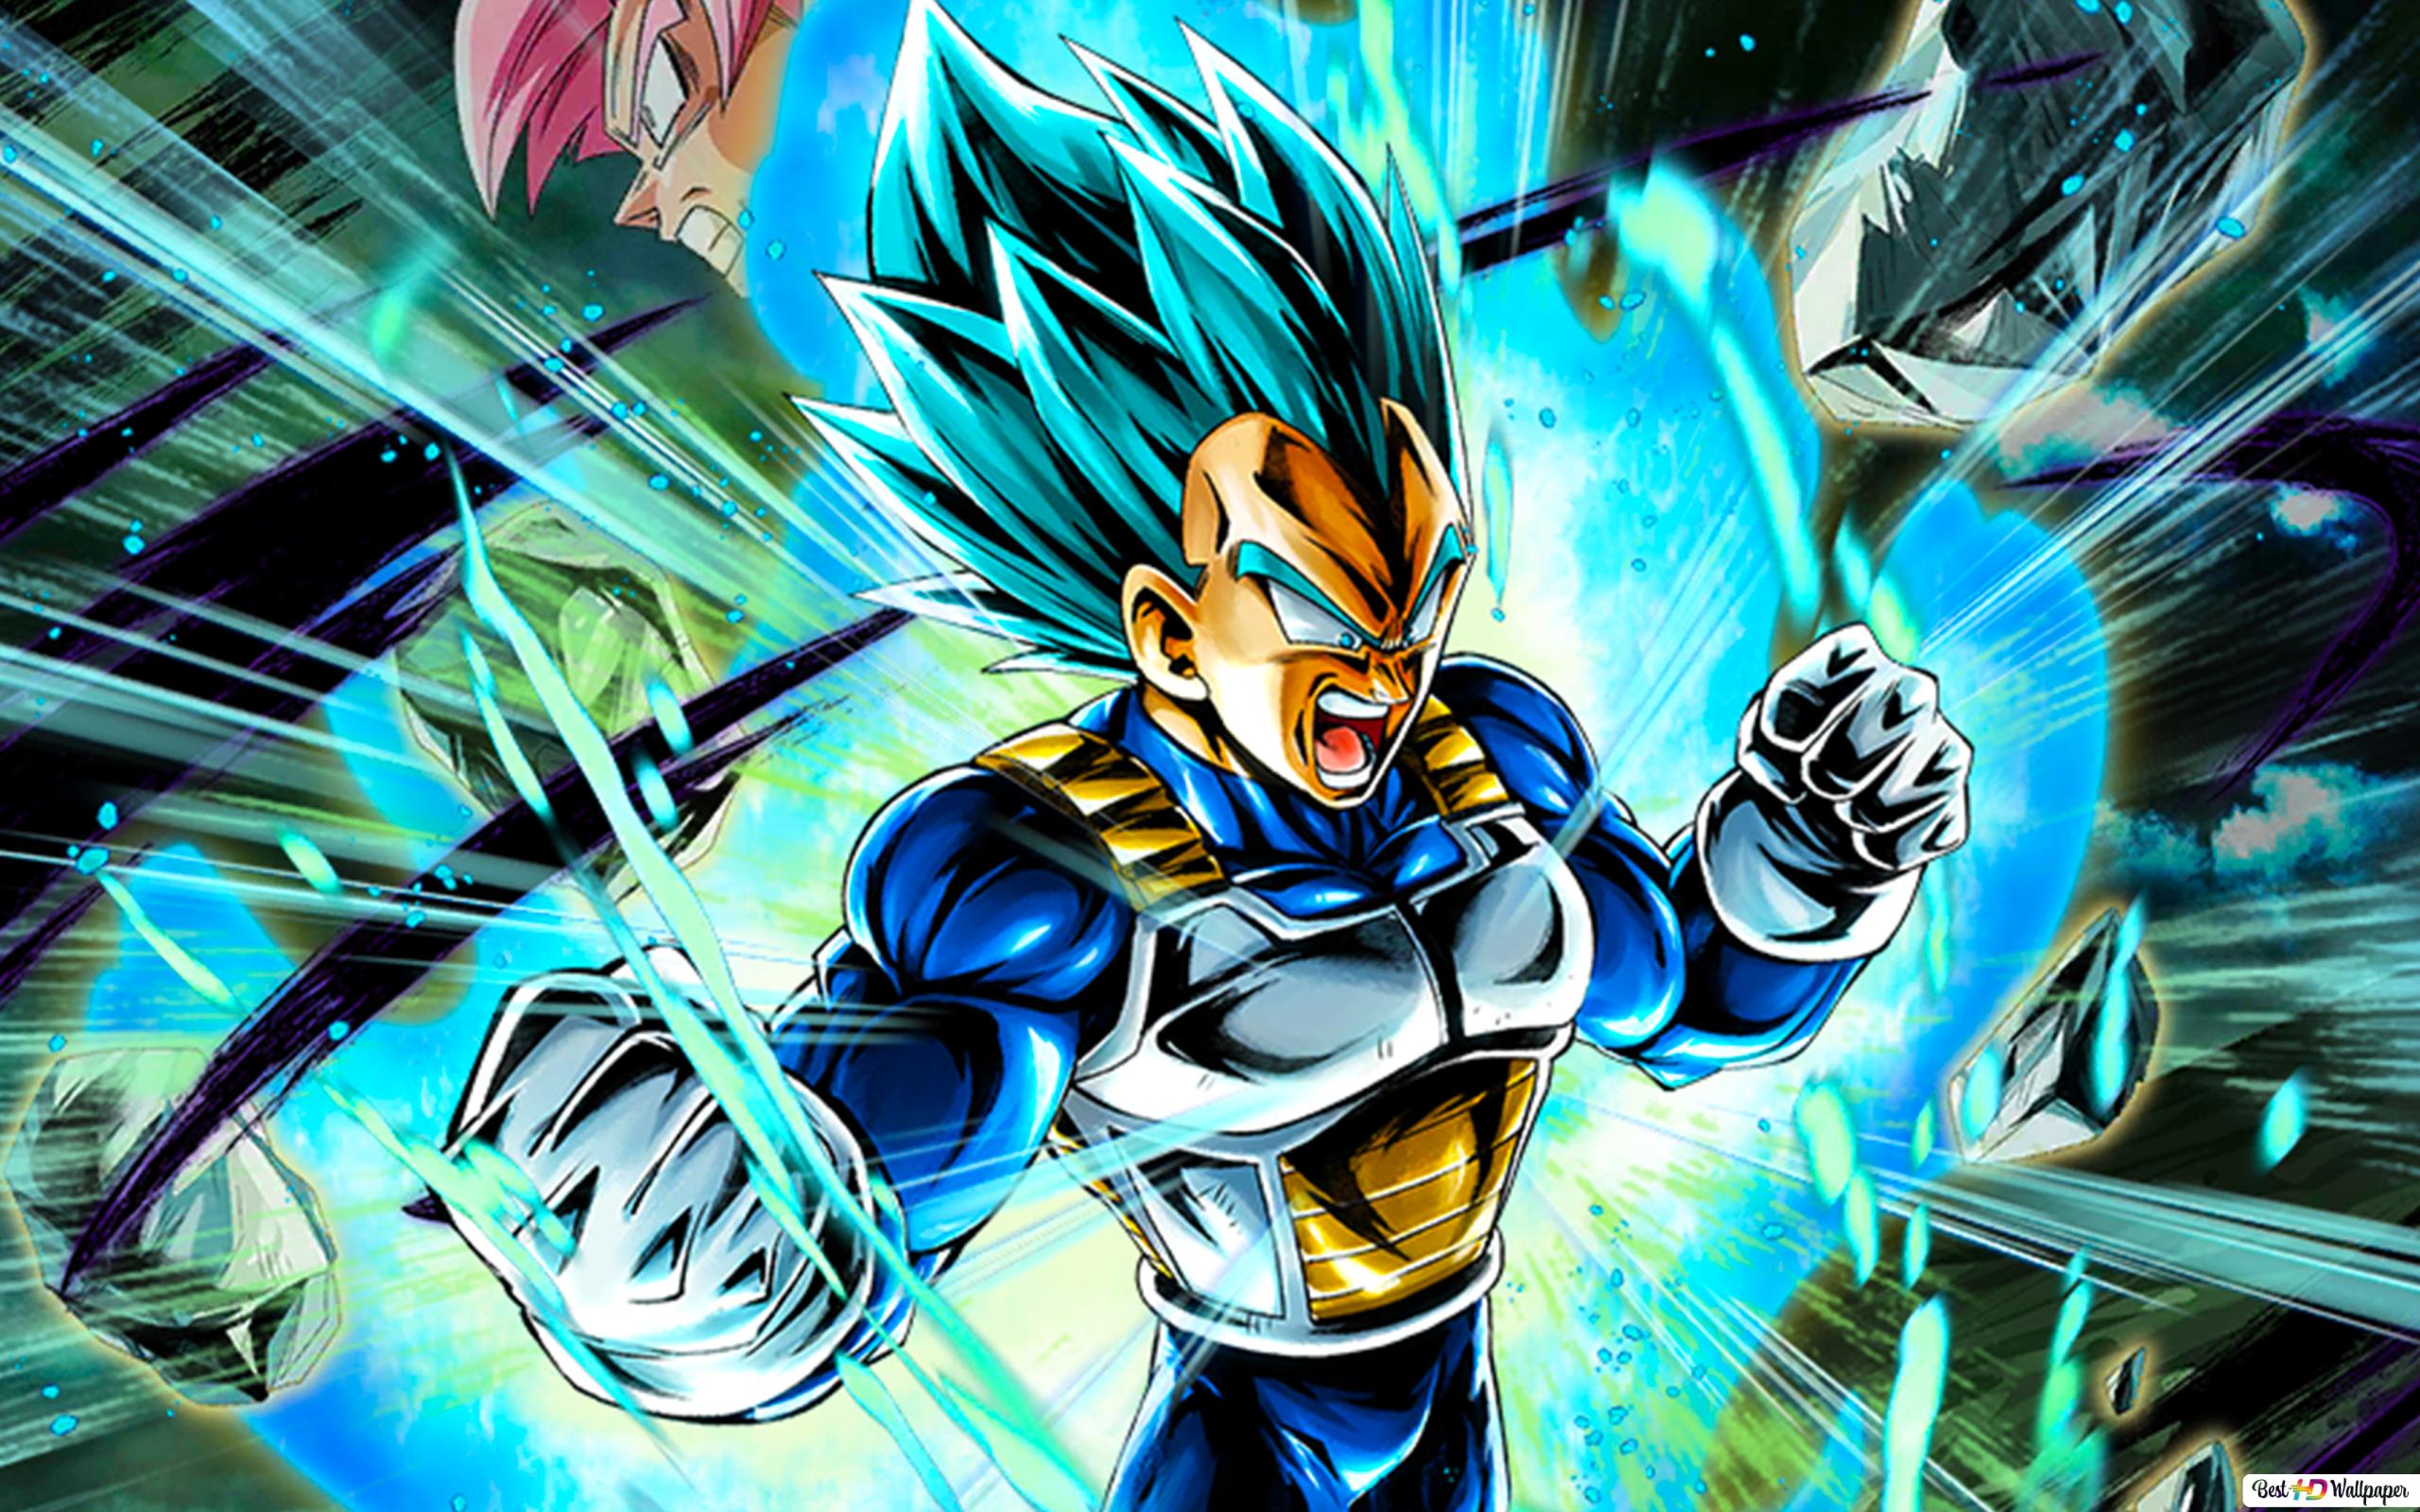 Super Saiyan Blue Vegeta from Dragon Ball Super [Dragon Ball Legends Arts] for Desktop HD wallpapers download